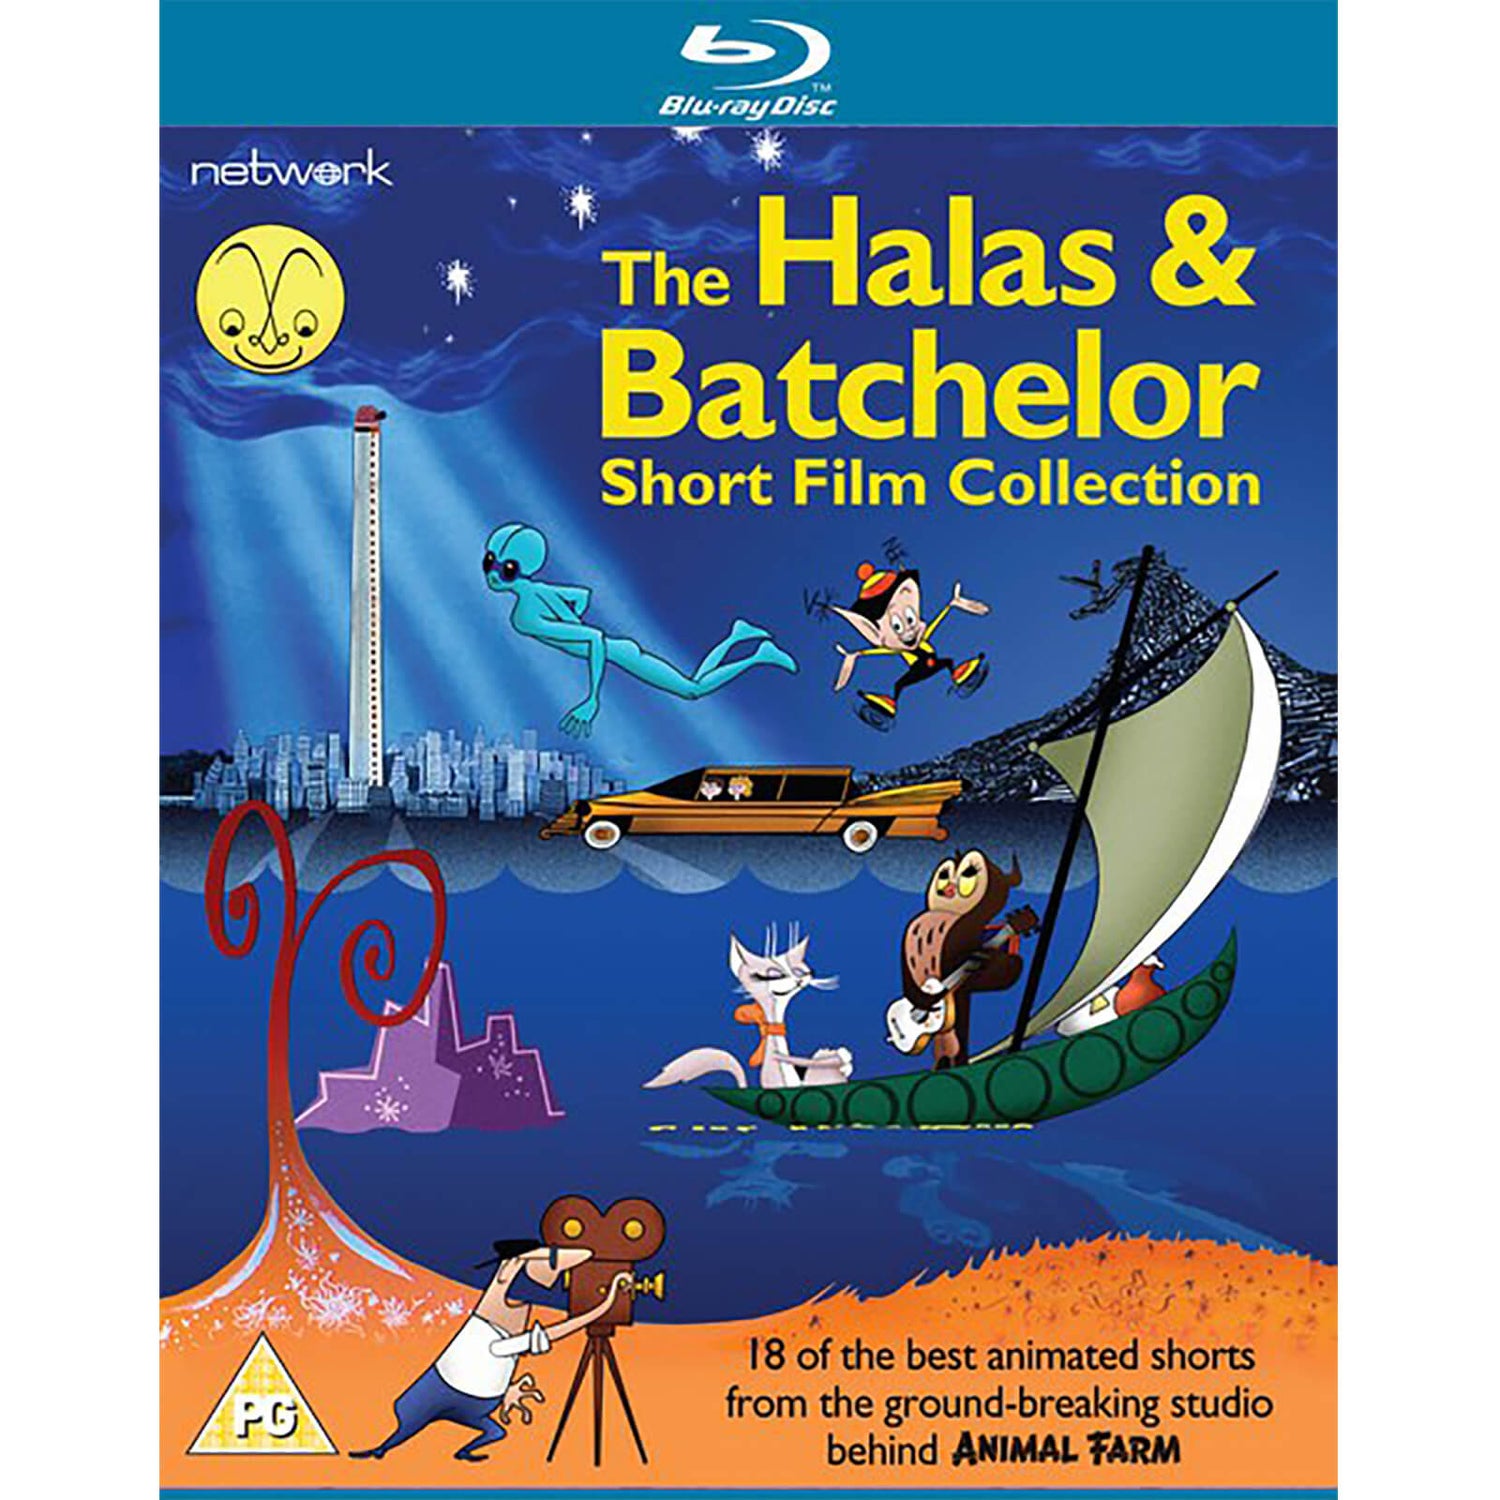 The Halas & Batchelor Short Film Collection Blu-ray